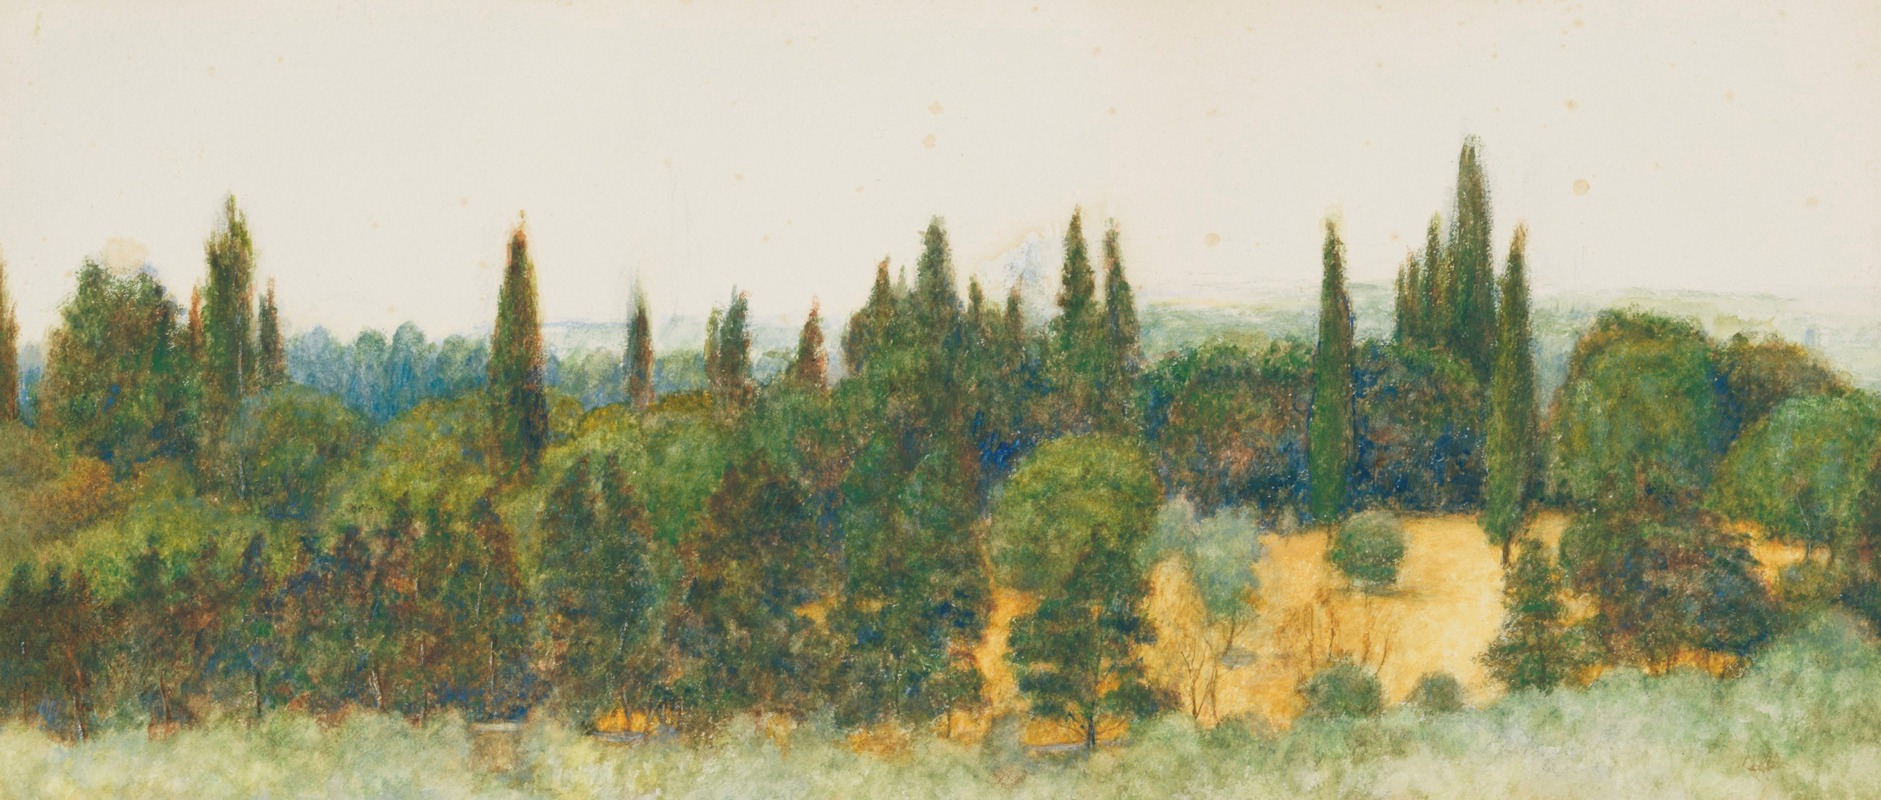 John Roddam Spencer Stanhope - An Italian valley with pine trees